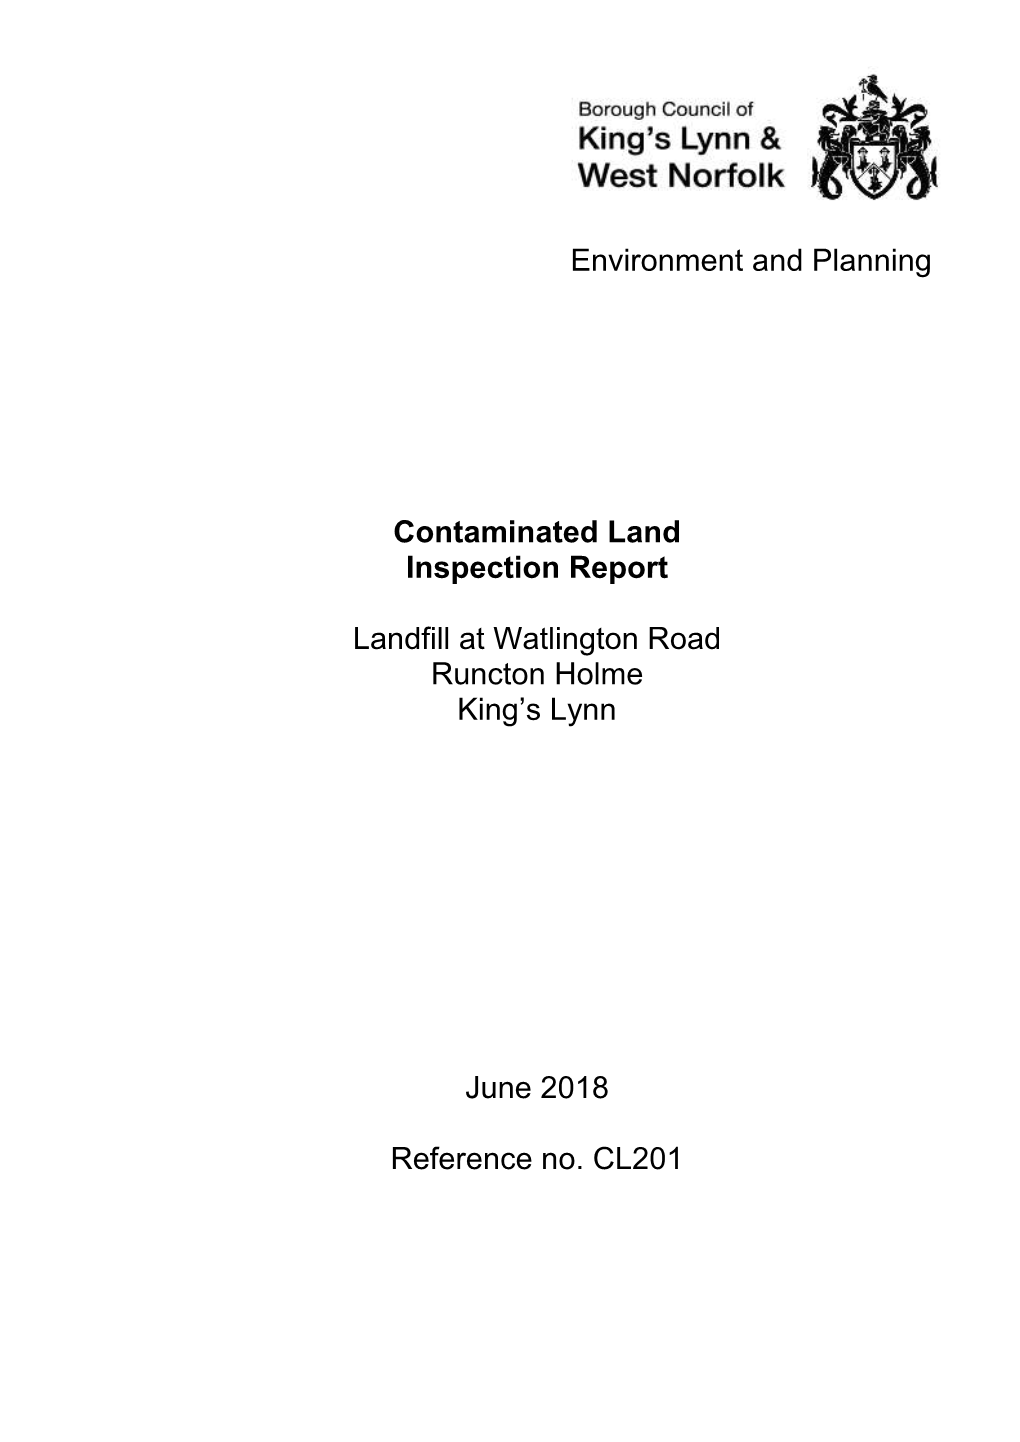 Watlington Road Contaminated Land Inspection Report